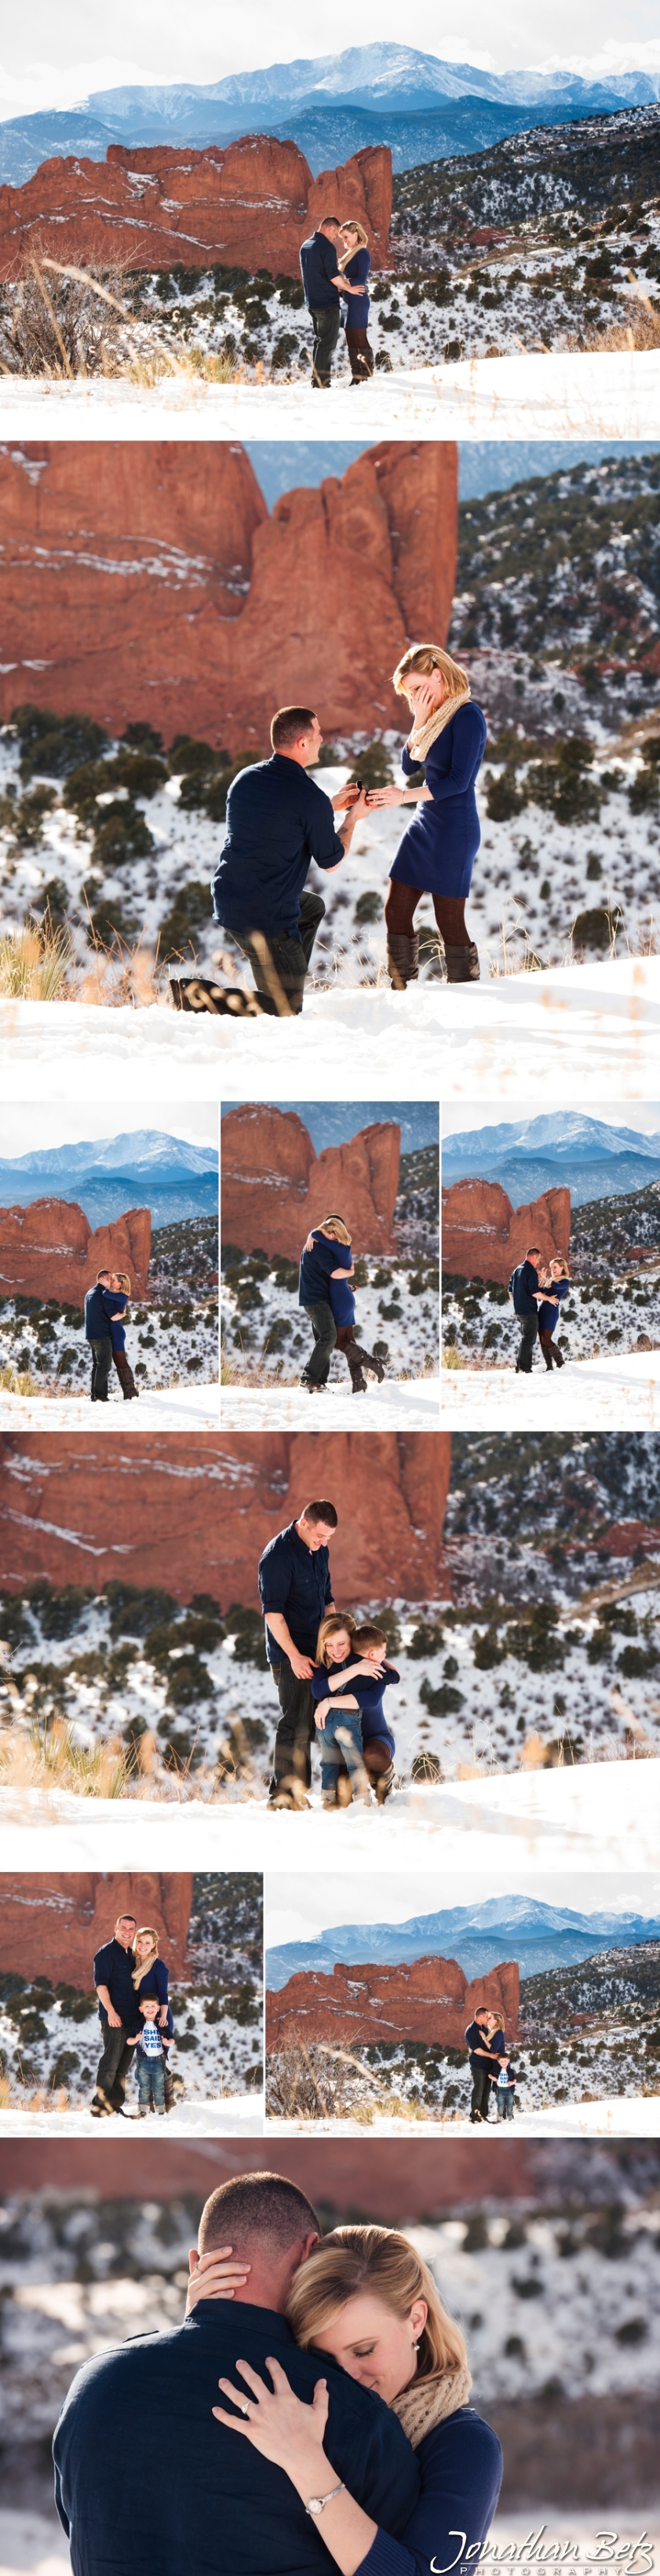 Colorado Springs Family & Engagement Portraits Photographer Jonathan Betz Photography